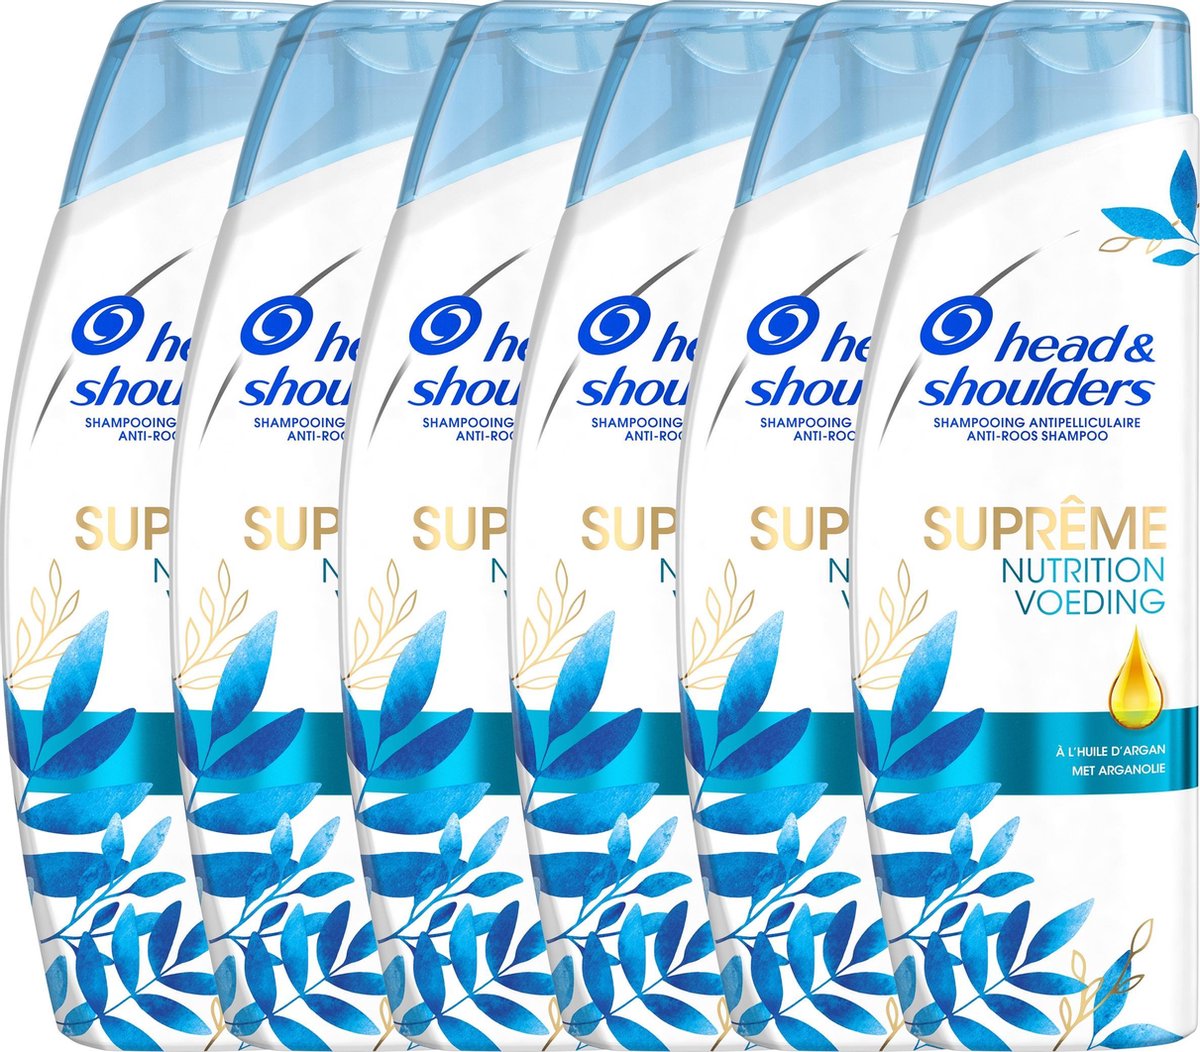 Head & Shoulders Supreme Voeding Anti-Roos Shampoo - Voor Vrouwen - Voordeelverpakking - 6 x 250 ml